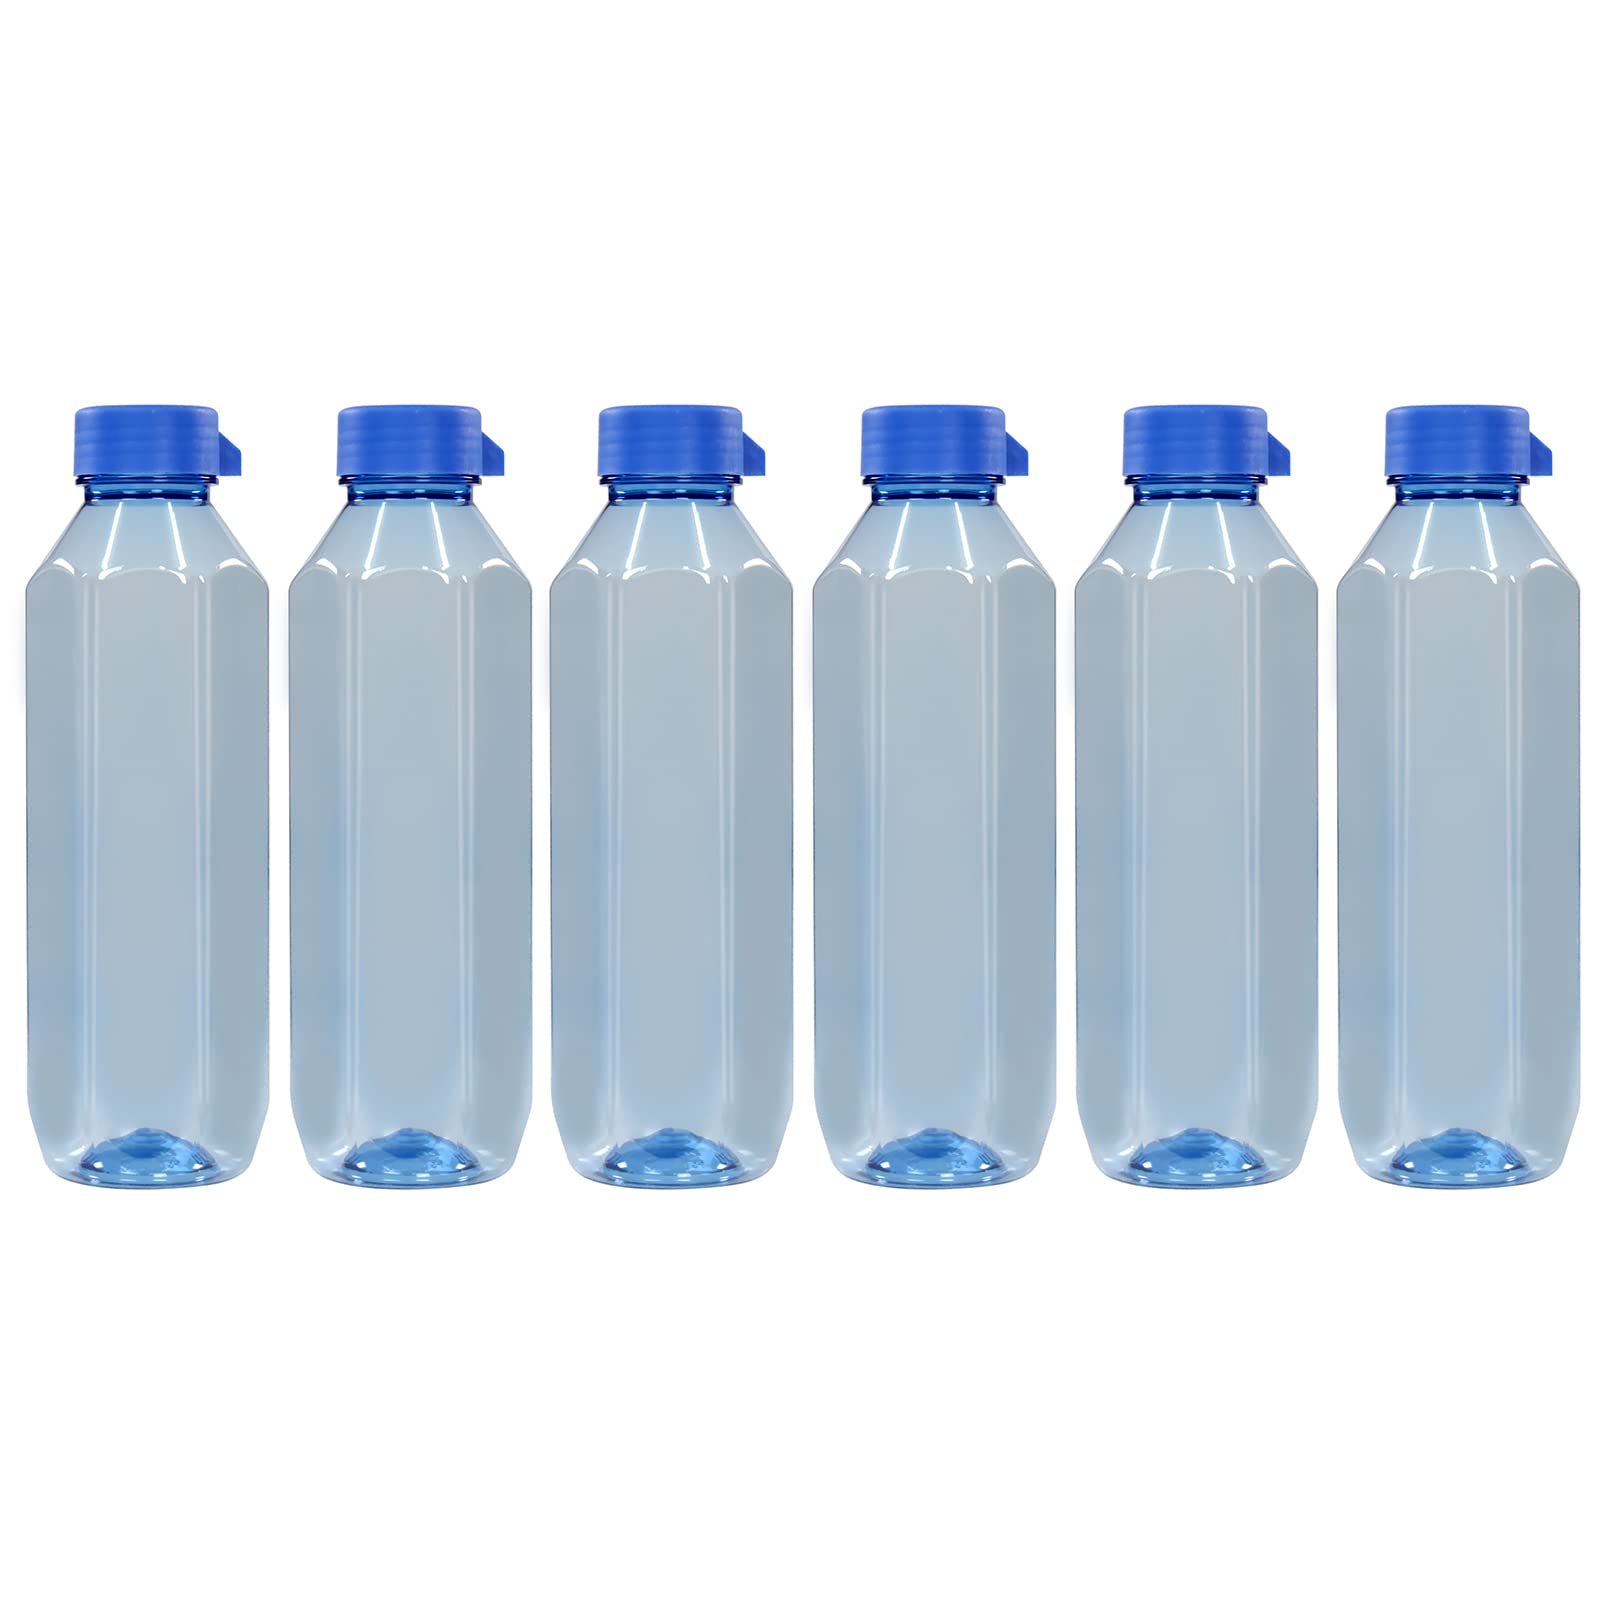 PEARLPET Topaz Plastic Water Bottle Set of 6 Pcs, Each 1000ml, Blue